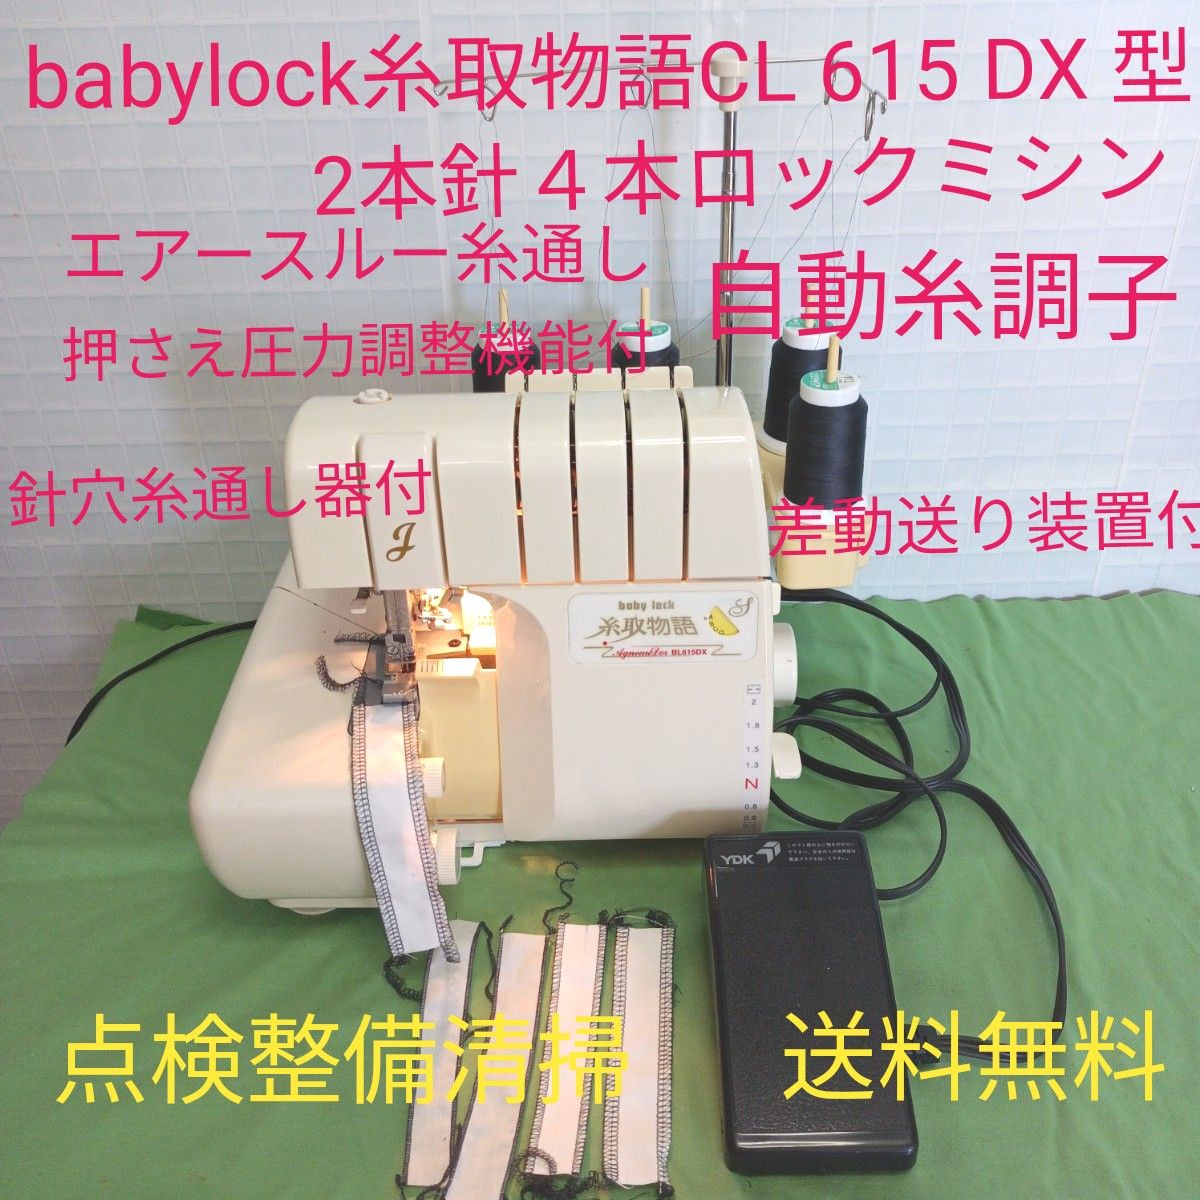 babylock糸取物語BL615型2本針４本ロックミシン